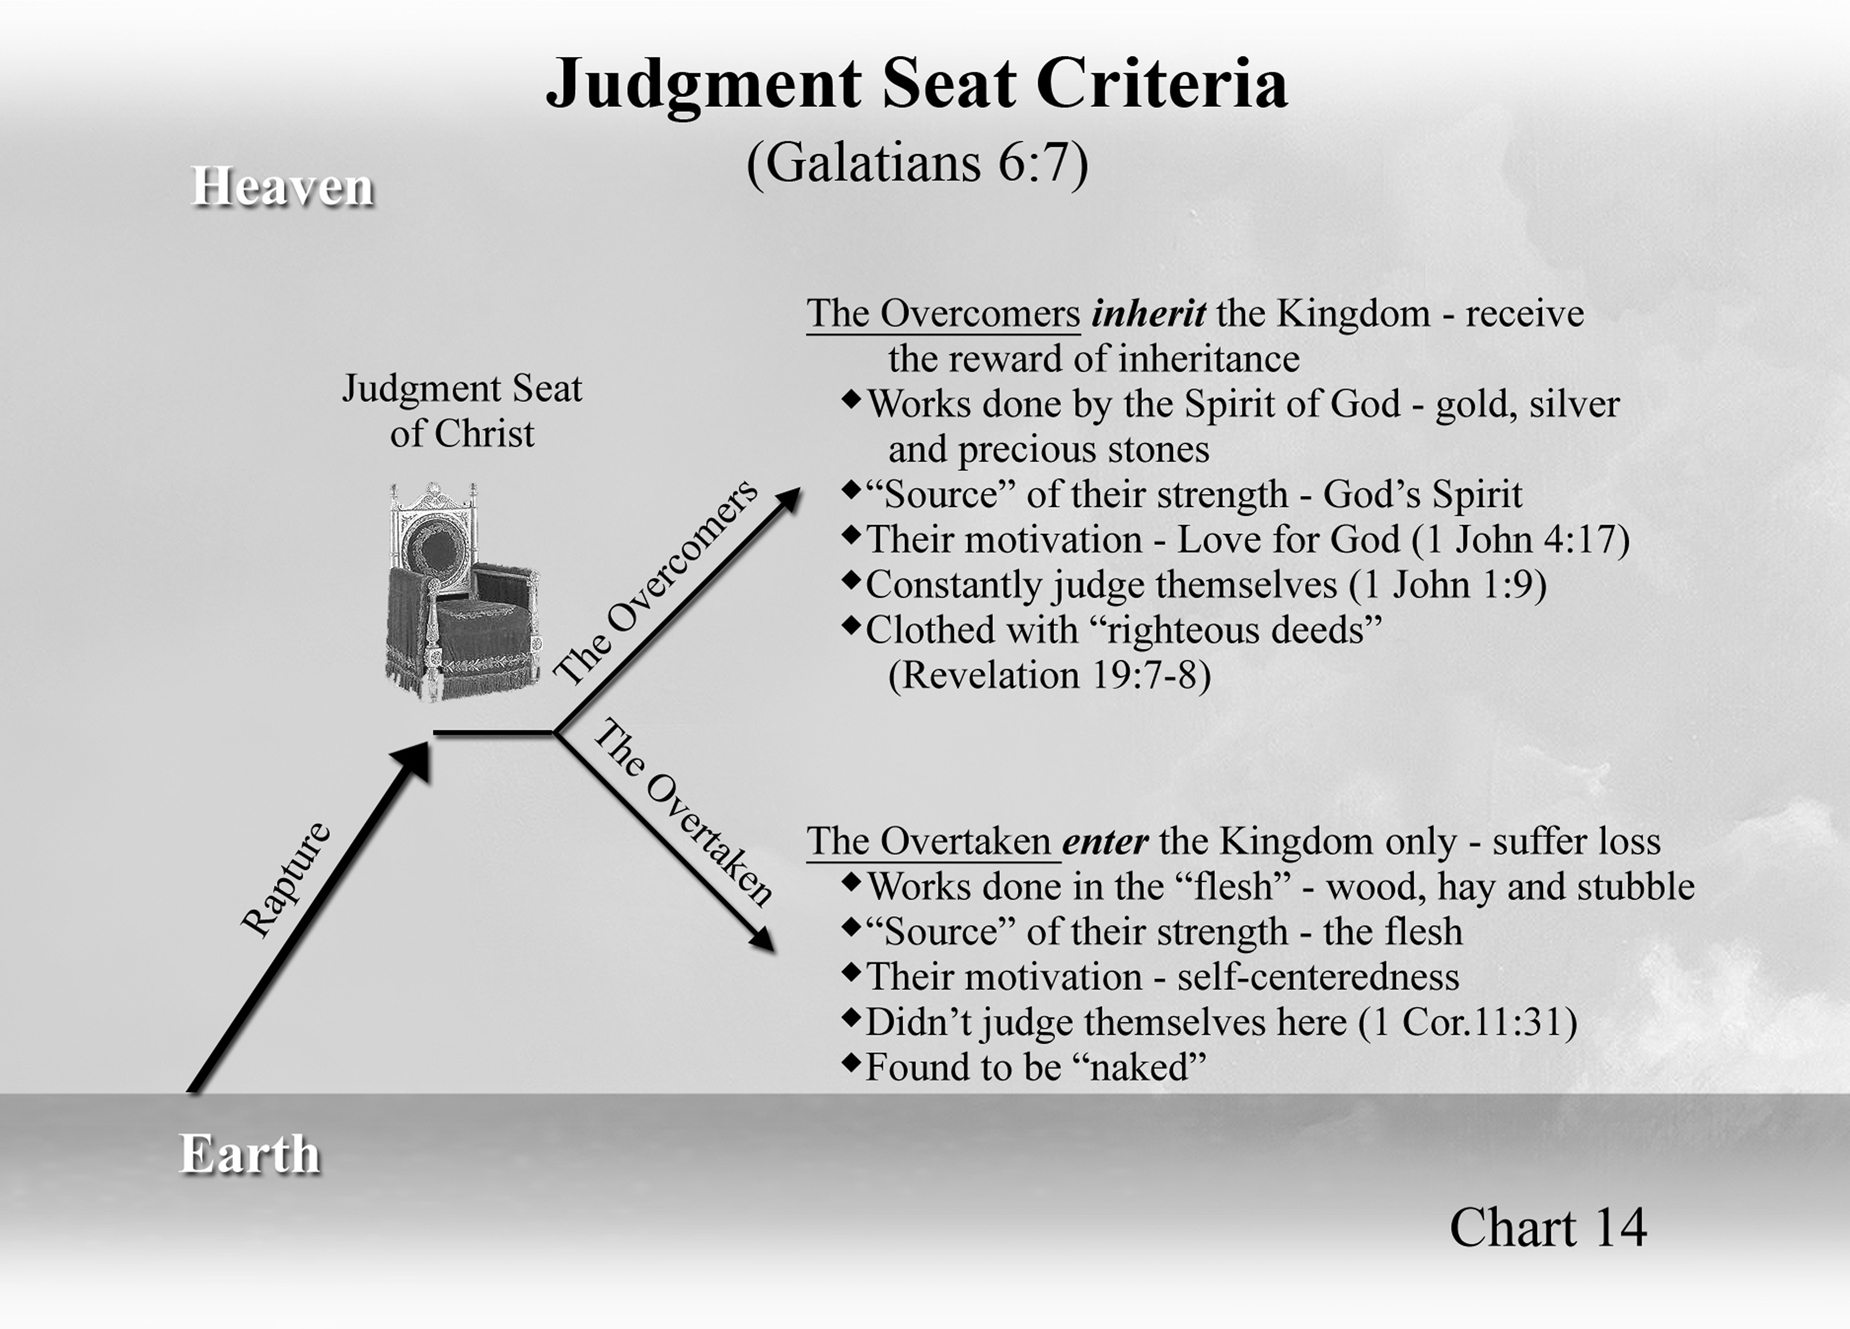 Chart 14: Judgement Seat Criteria